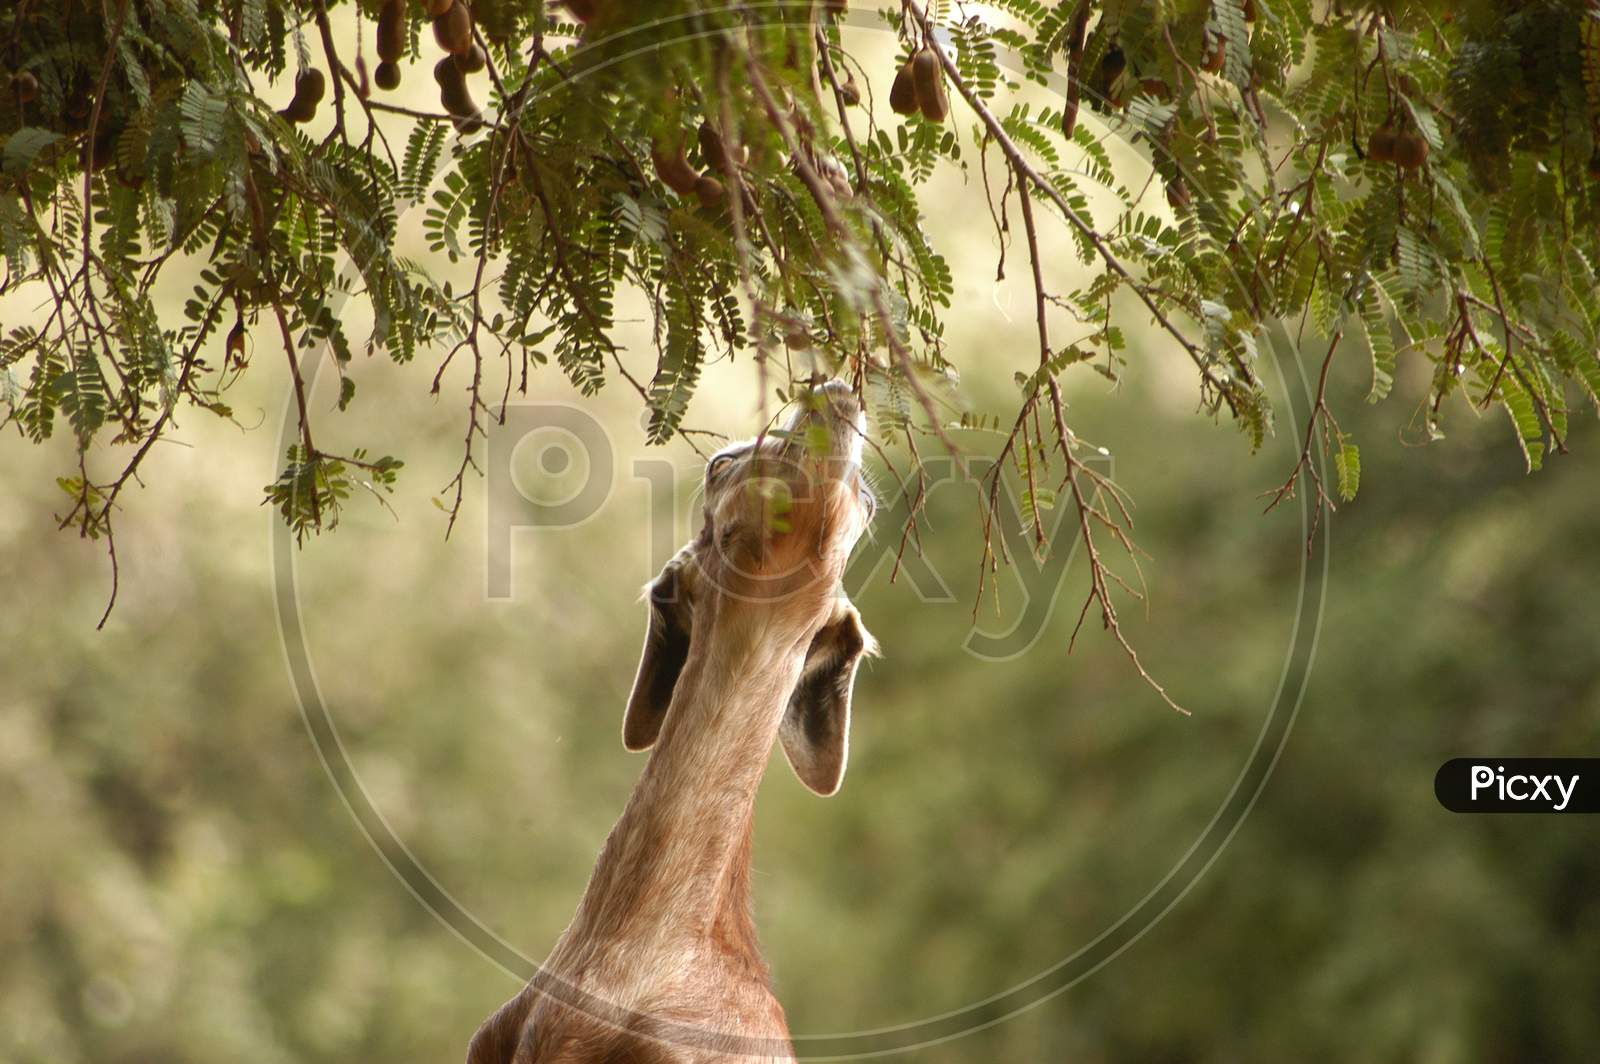 Goat eating on Tree